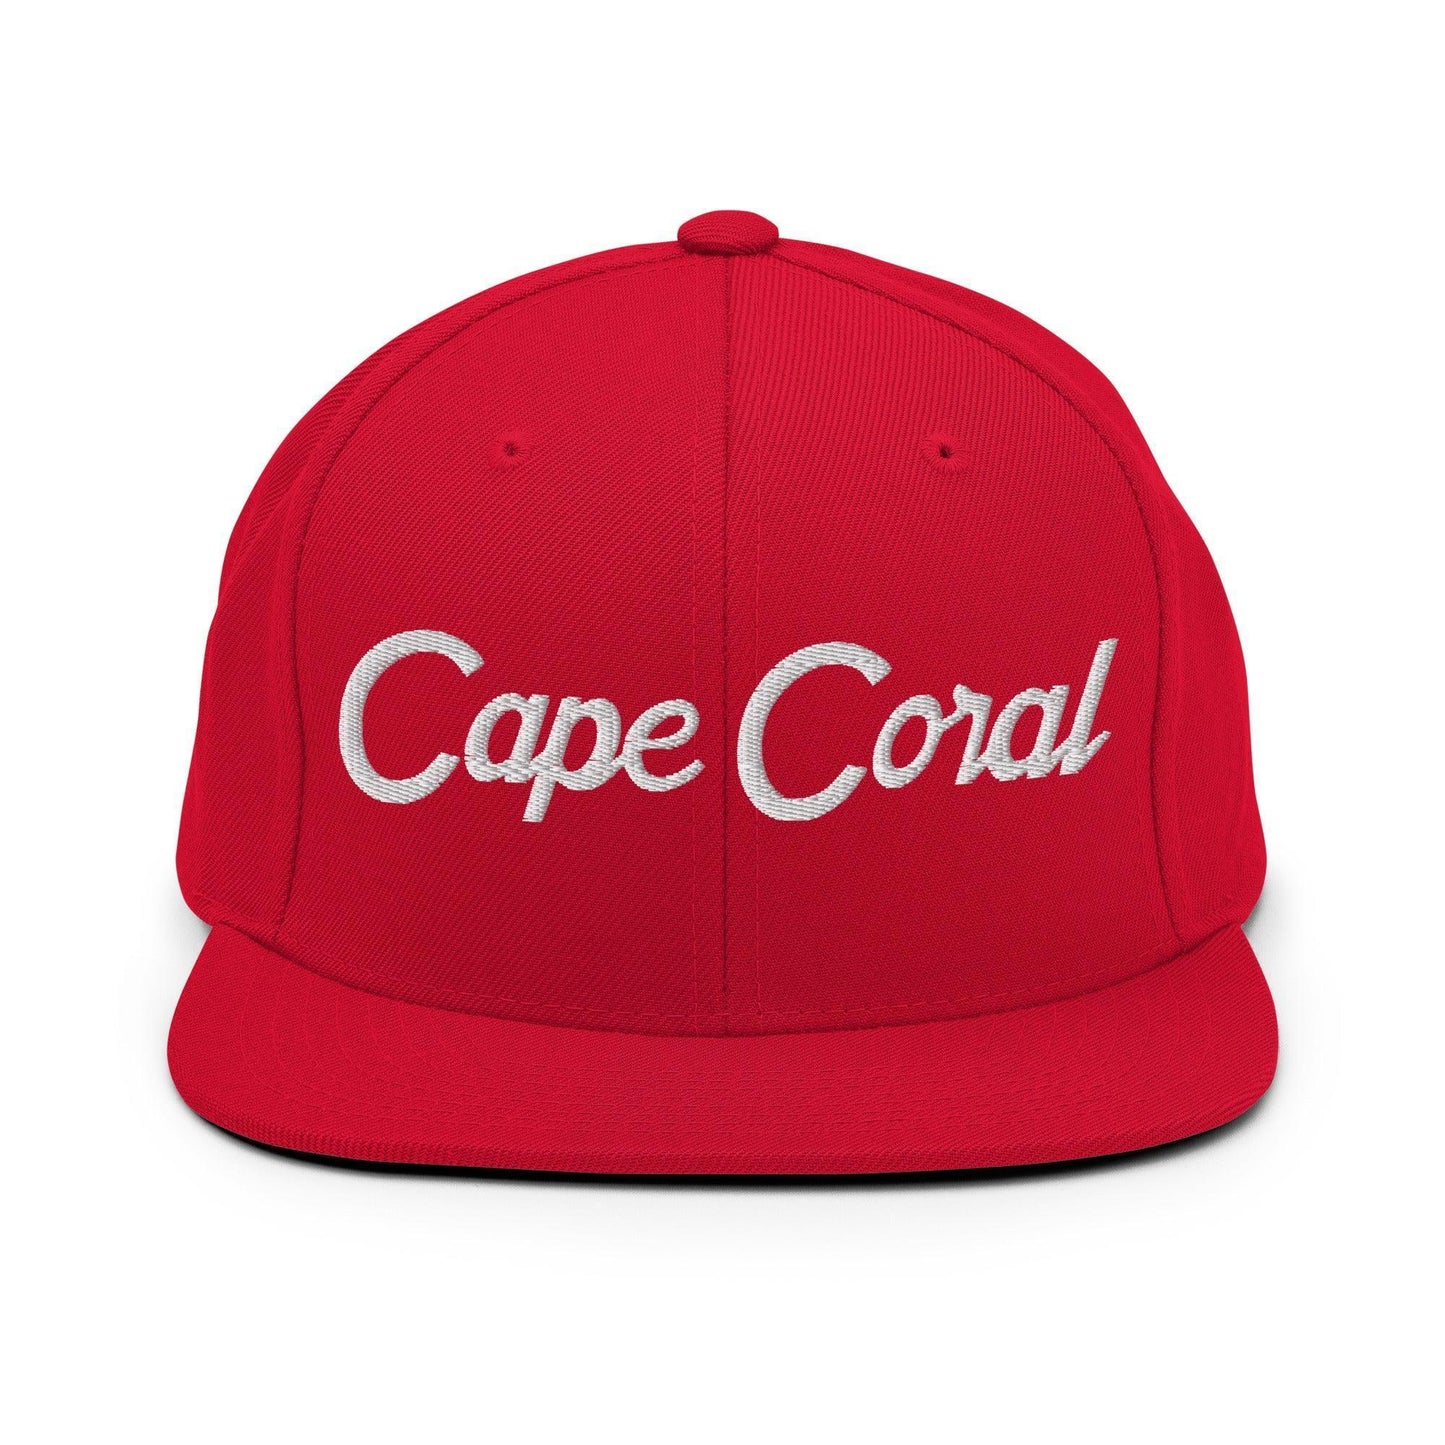 Cape Coral Script Snapback Hat Red